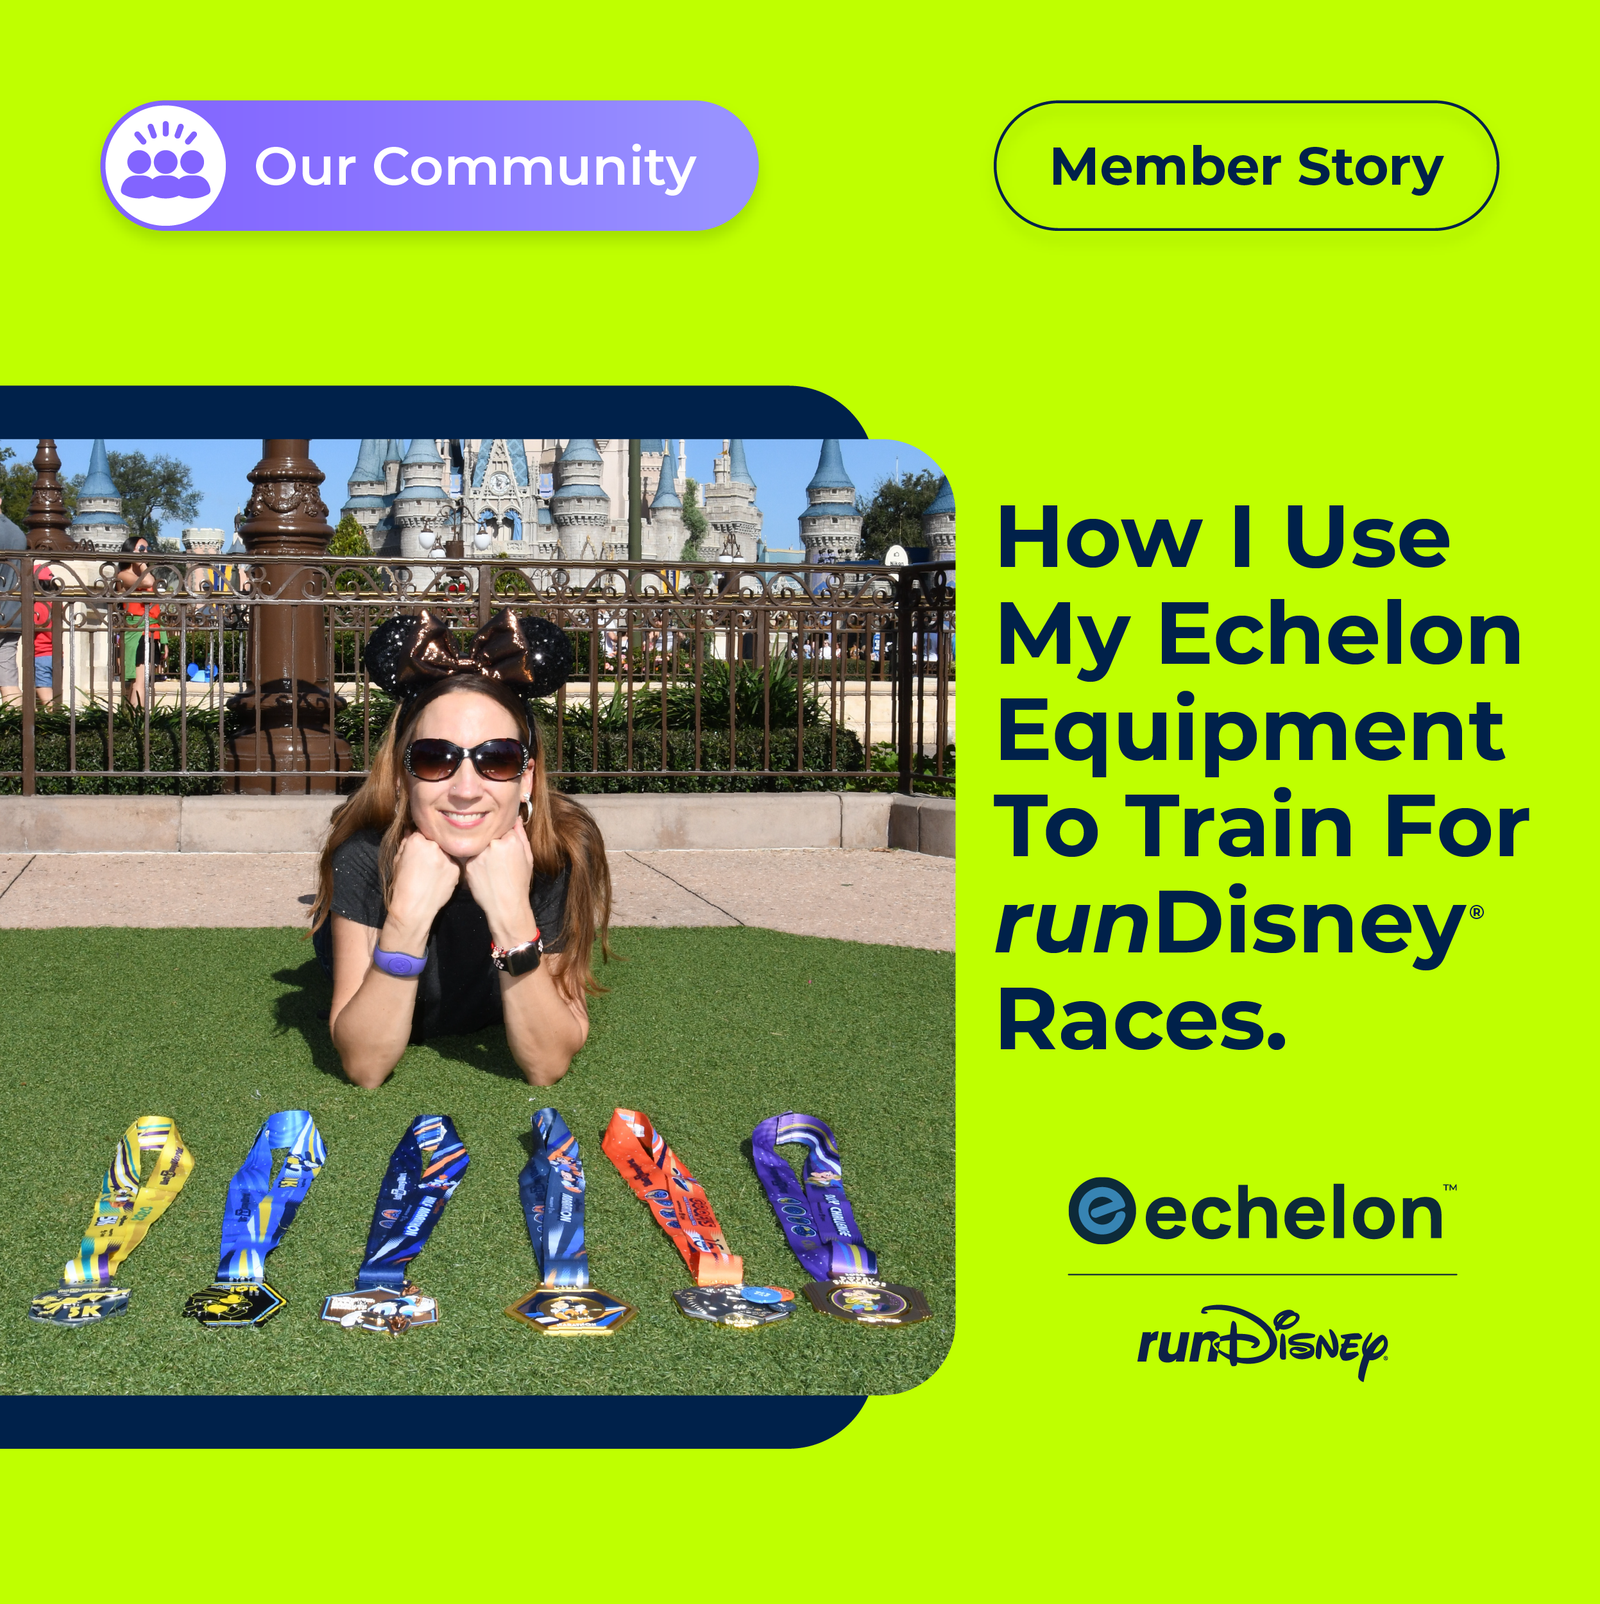 Member Story: How I use my Echelon equipment to train for runDisney races